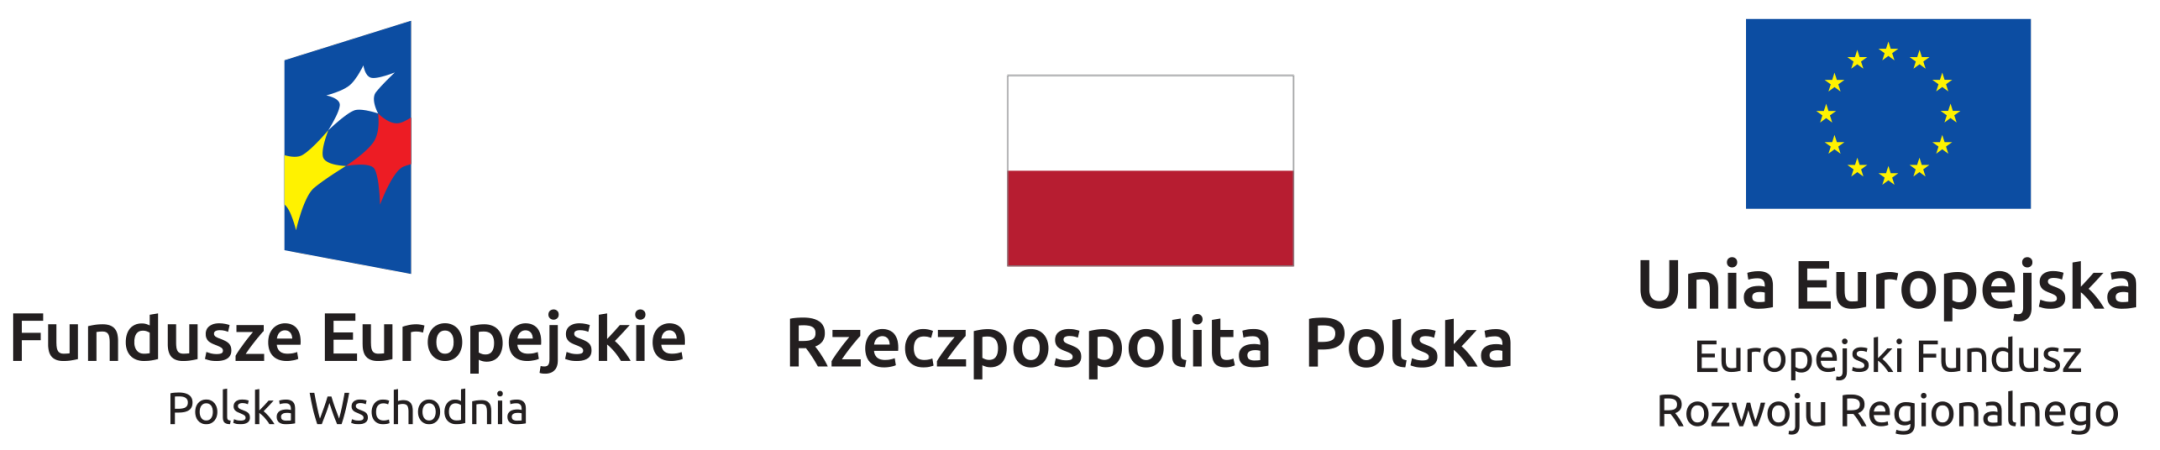 The European Union logo, the Polish Flag and the European Funds logo